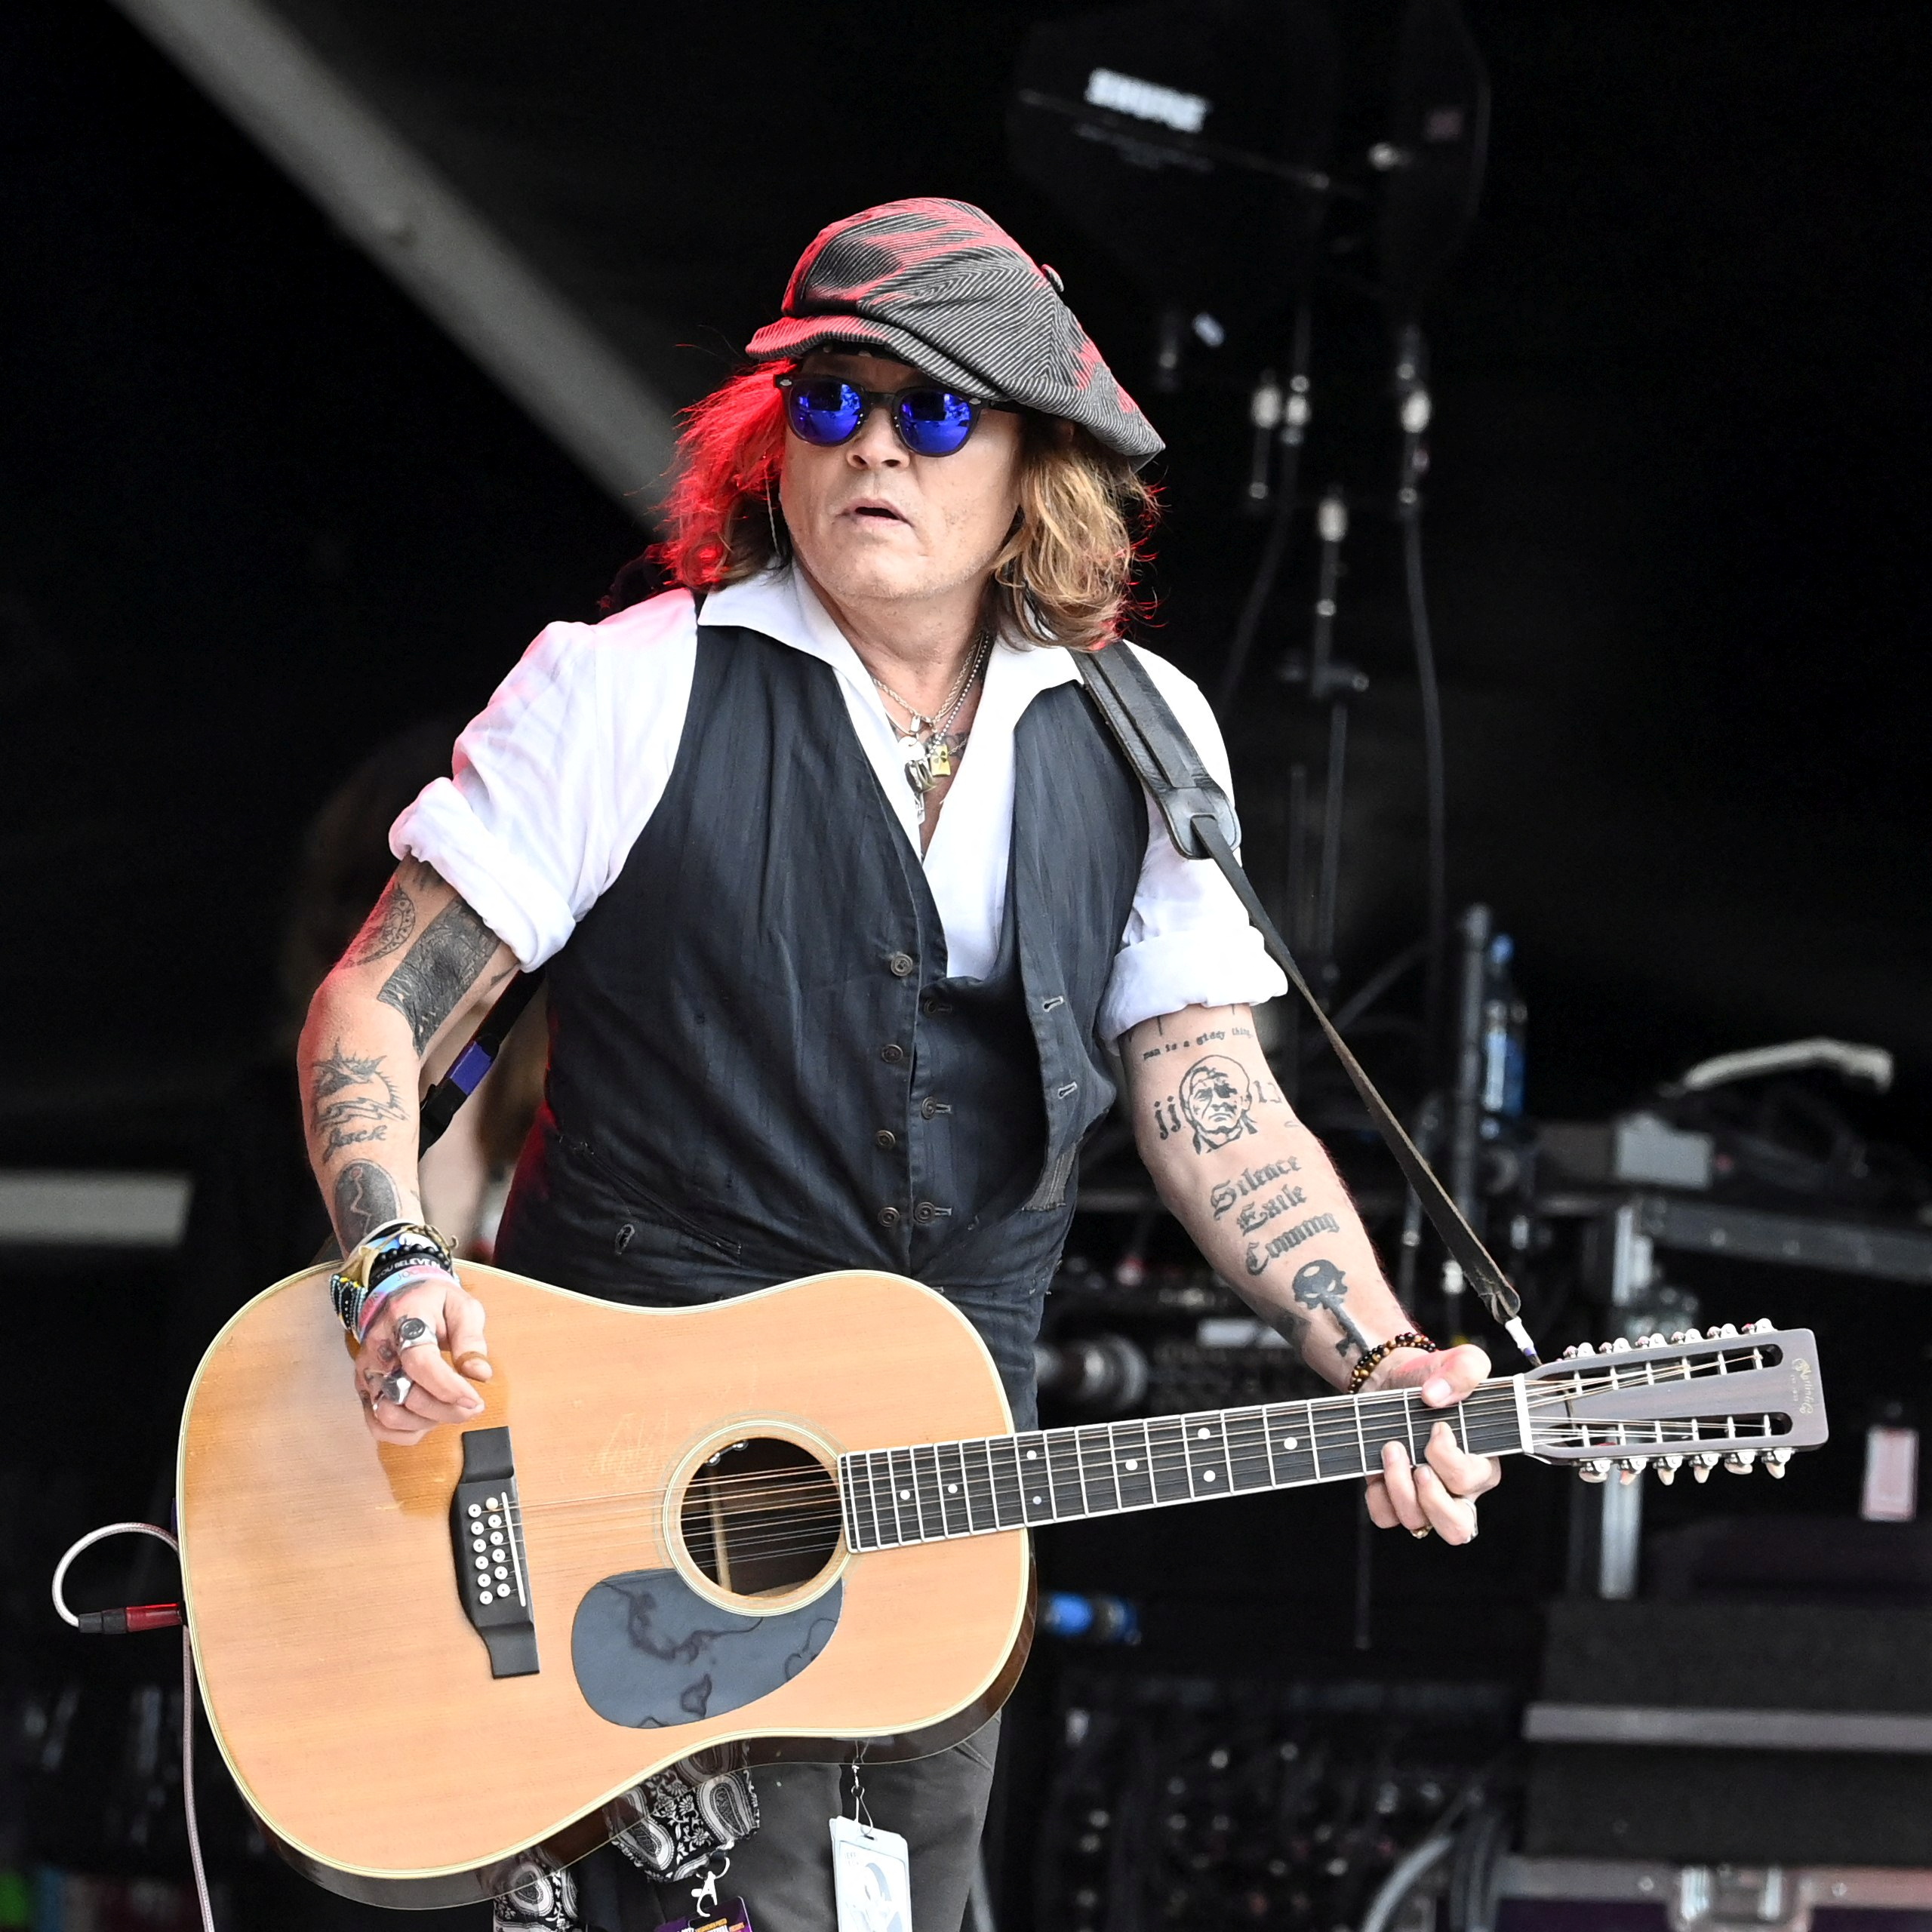 Johnny Depp, meanwhile, plans to release a rock album (Lehtikuva/Jussi Nukari via REUTERS)